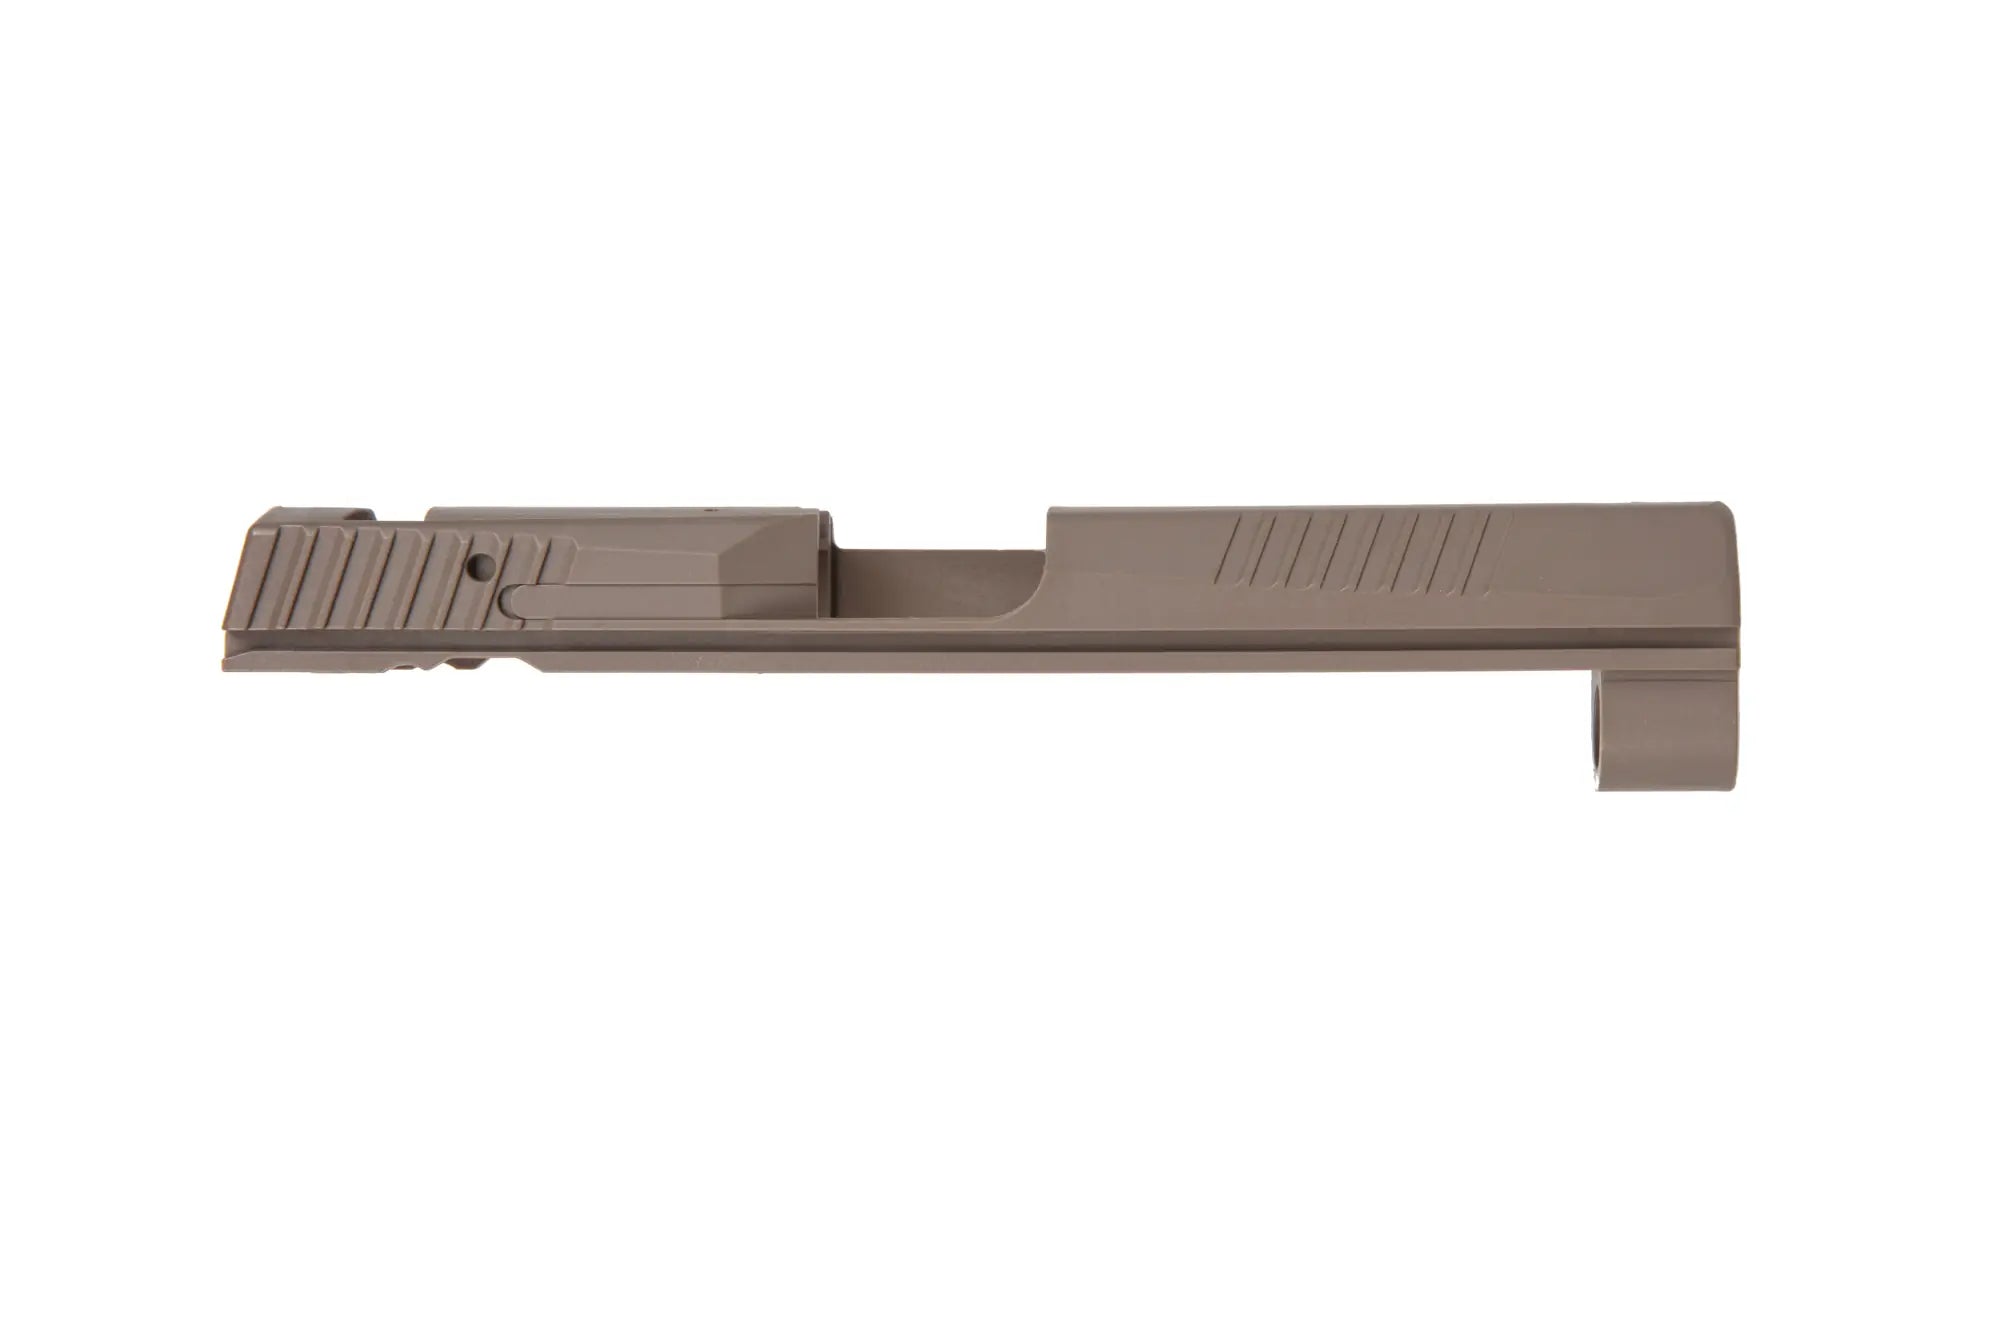 P09 Airsoft Pistol Replica Slide - Tan-2